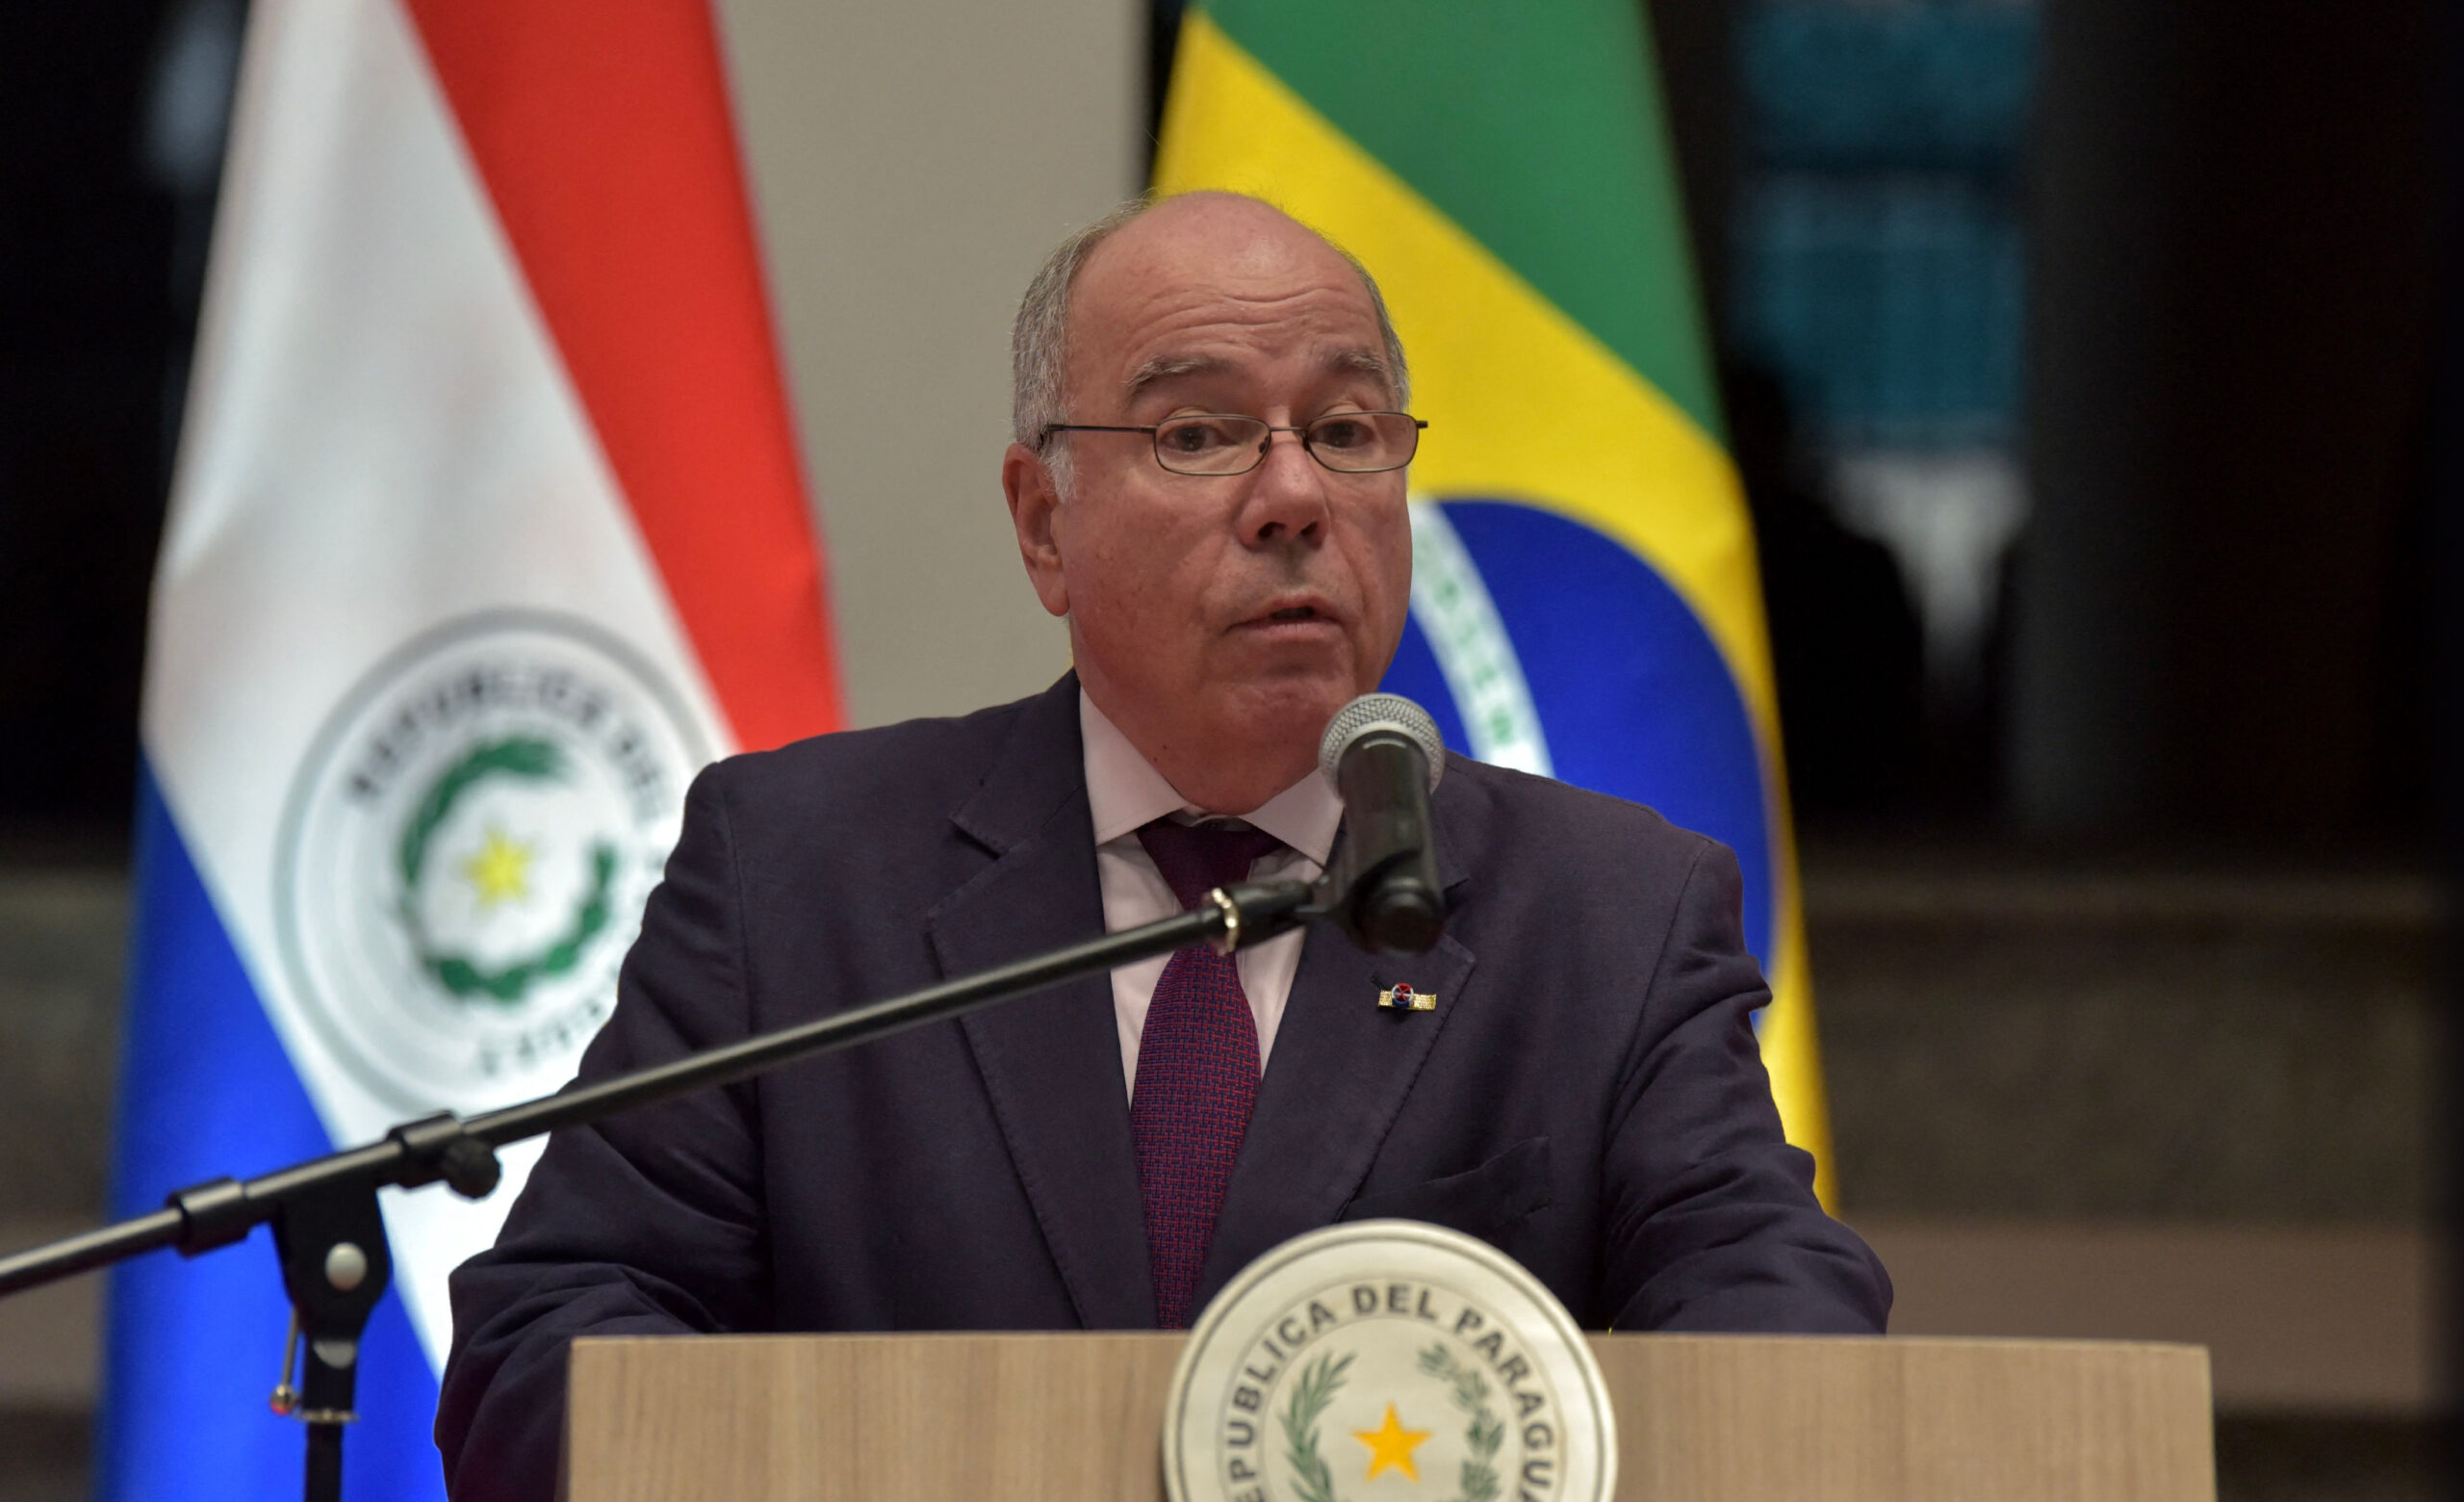 2023 JUL 26 New Permanent Representative of Brazil present…